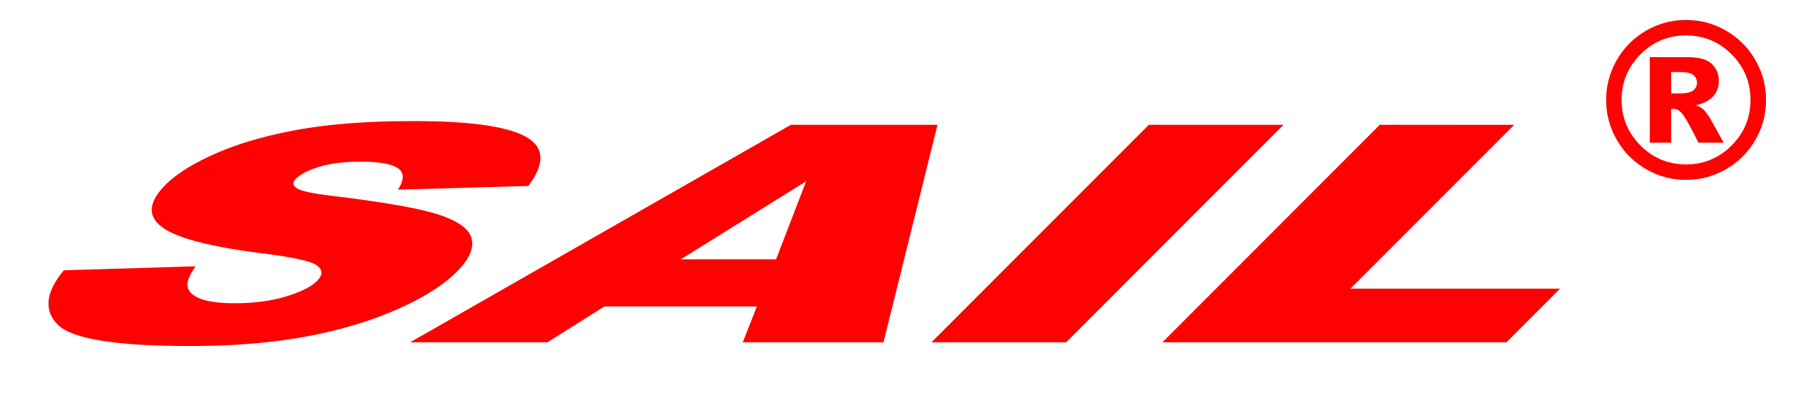 SAIL logo PNG